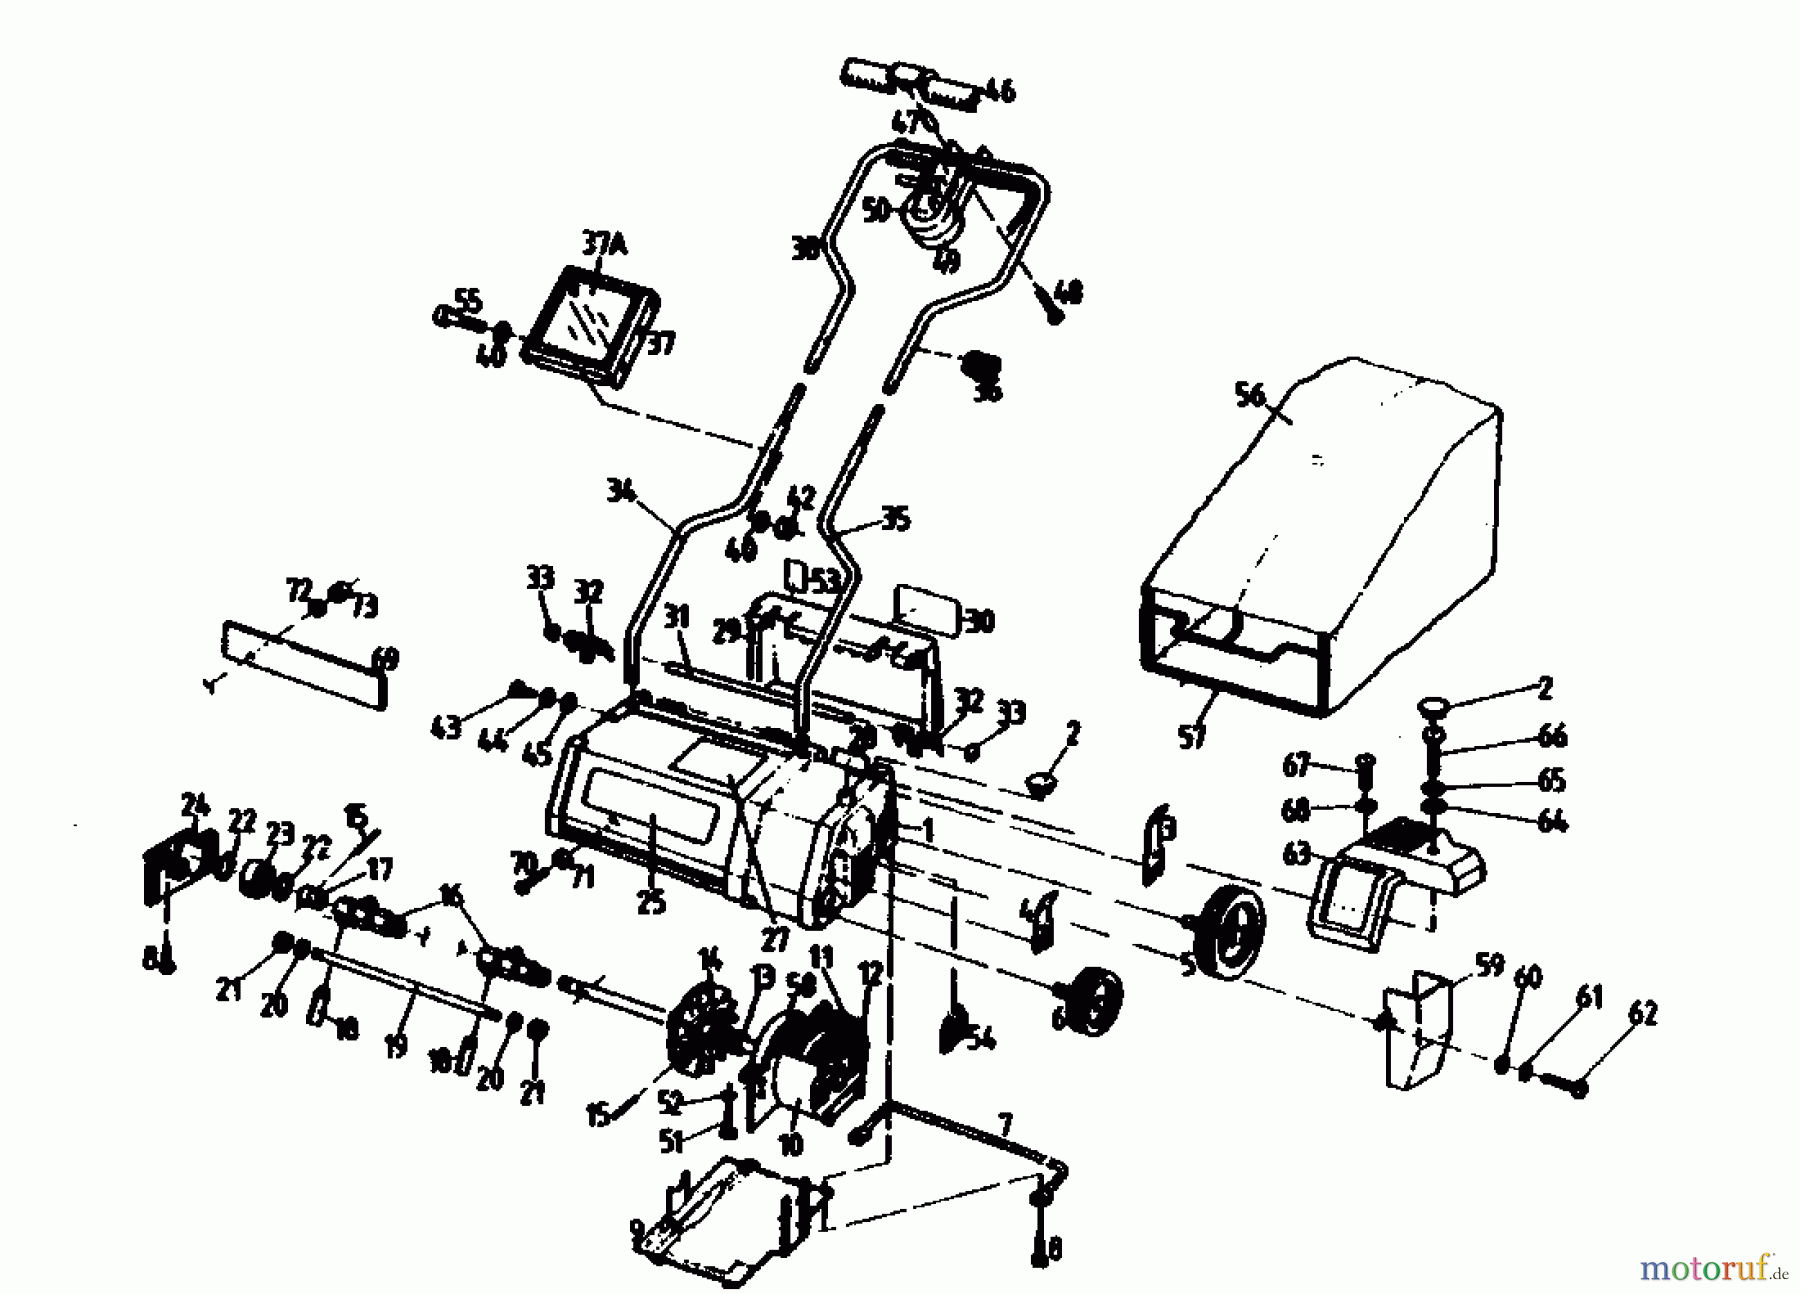  Gutbrod Electric verticutter VE 32 02846.04  (1989) Basic machine